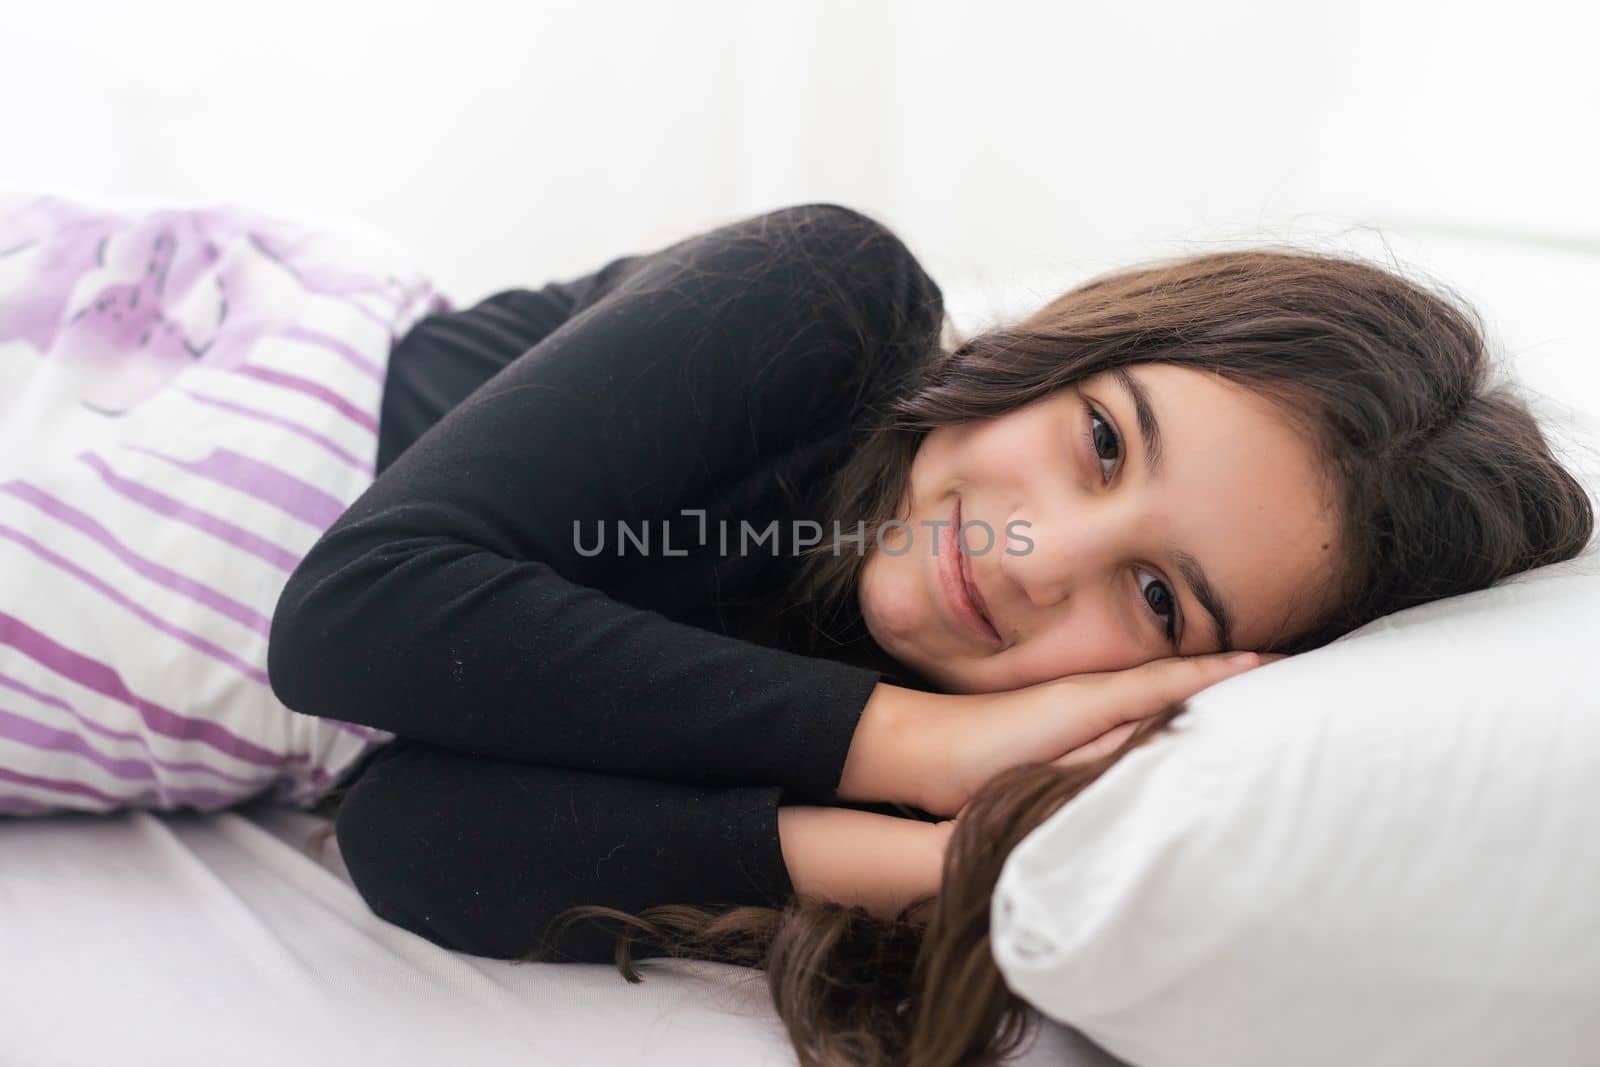 teenage girl in bed. resting, good night sleep concept